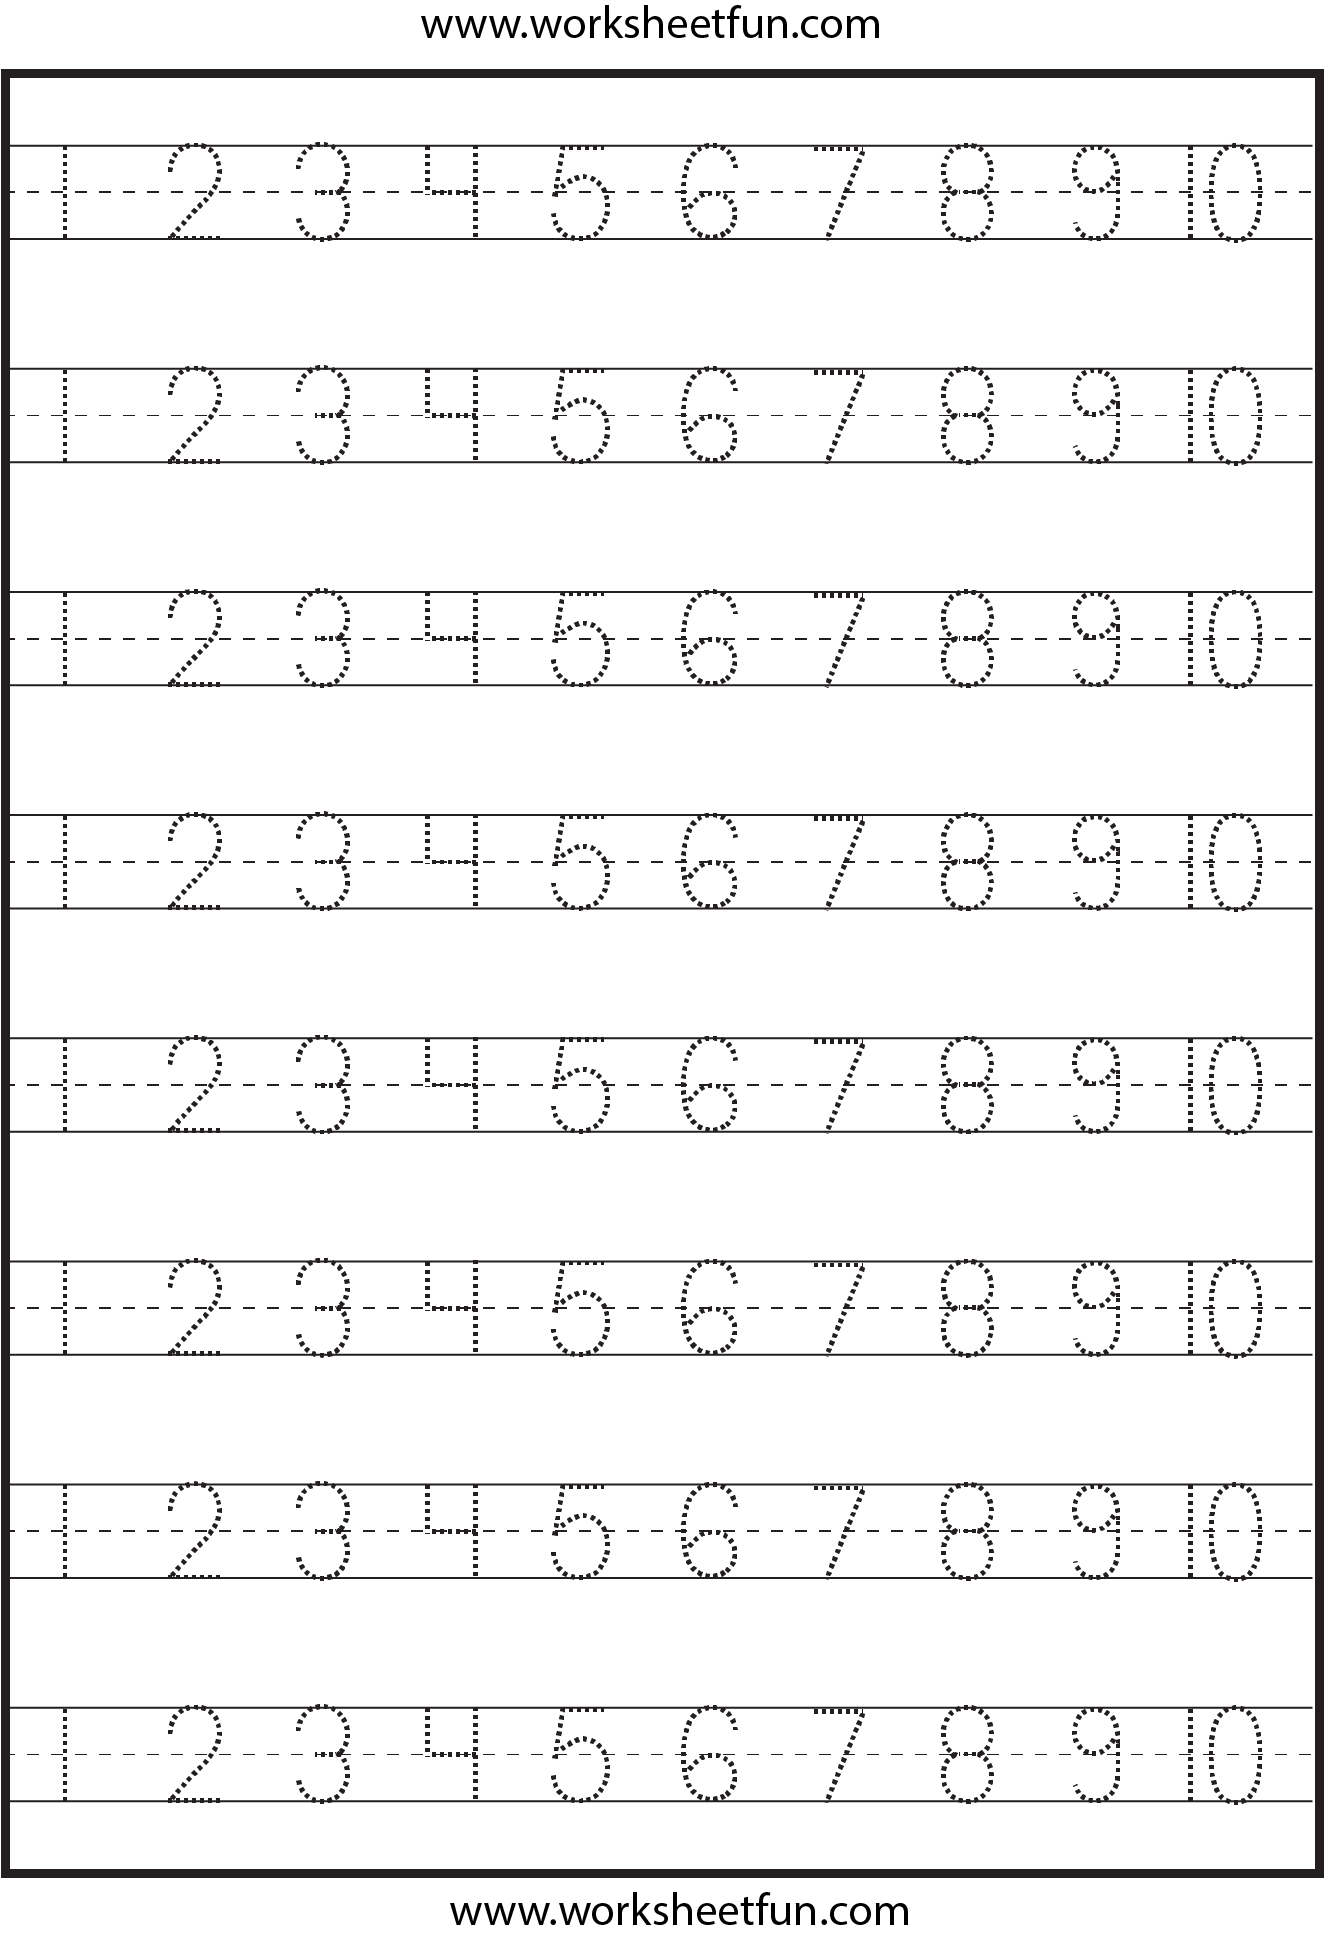 tracing-number-worksheets-tracing-worksheets